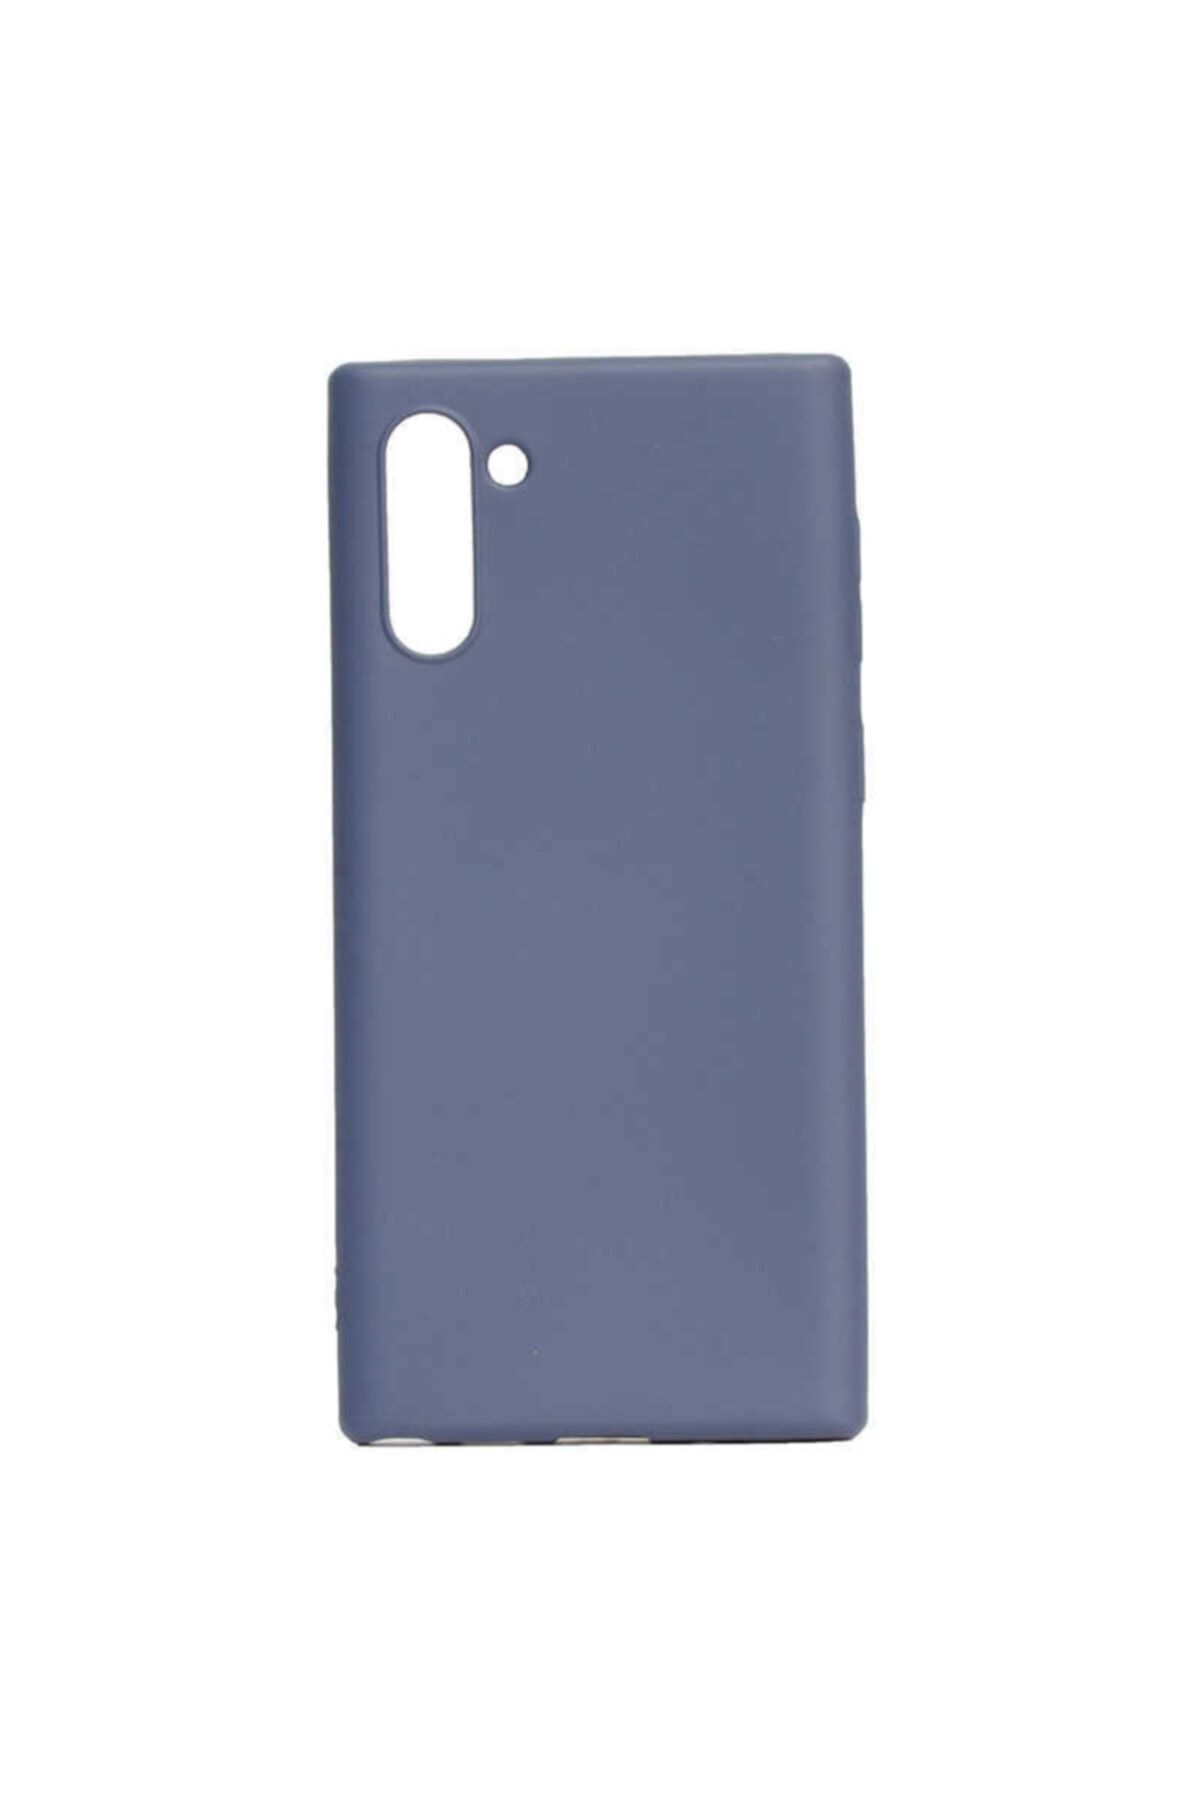 İncisoft Galaxy Note 10 Uyumlu Ince Yumuşak Soft Tasarım Renkli Silikon Kılıf